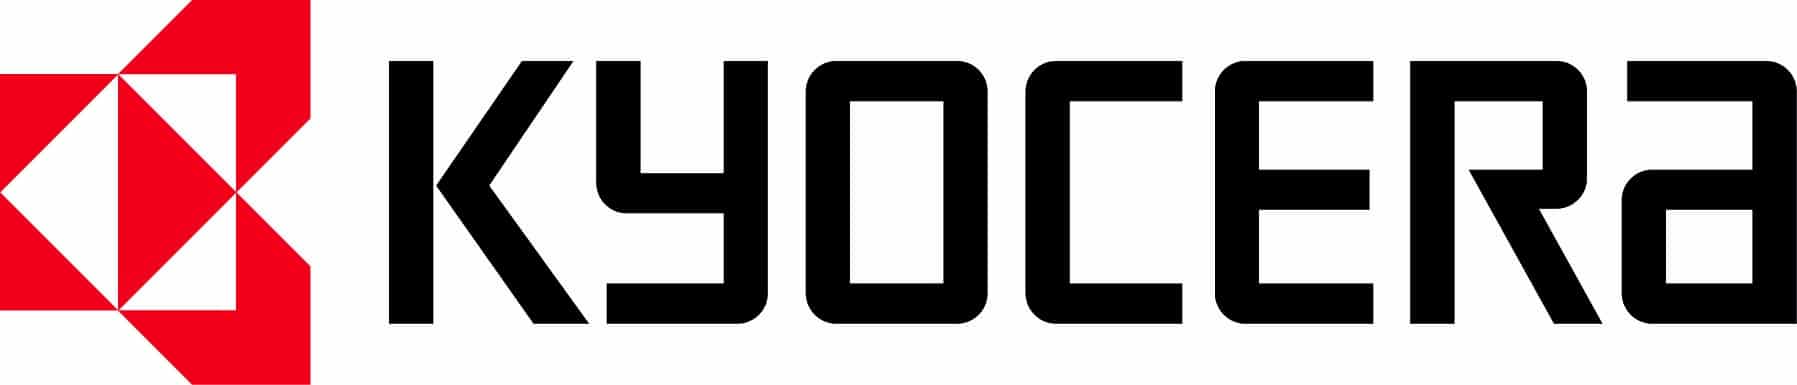 01_KYOCERA-logo